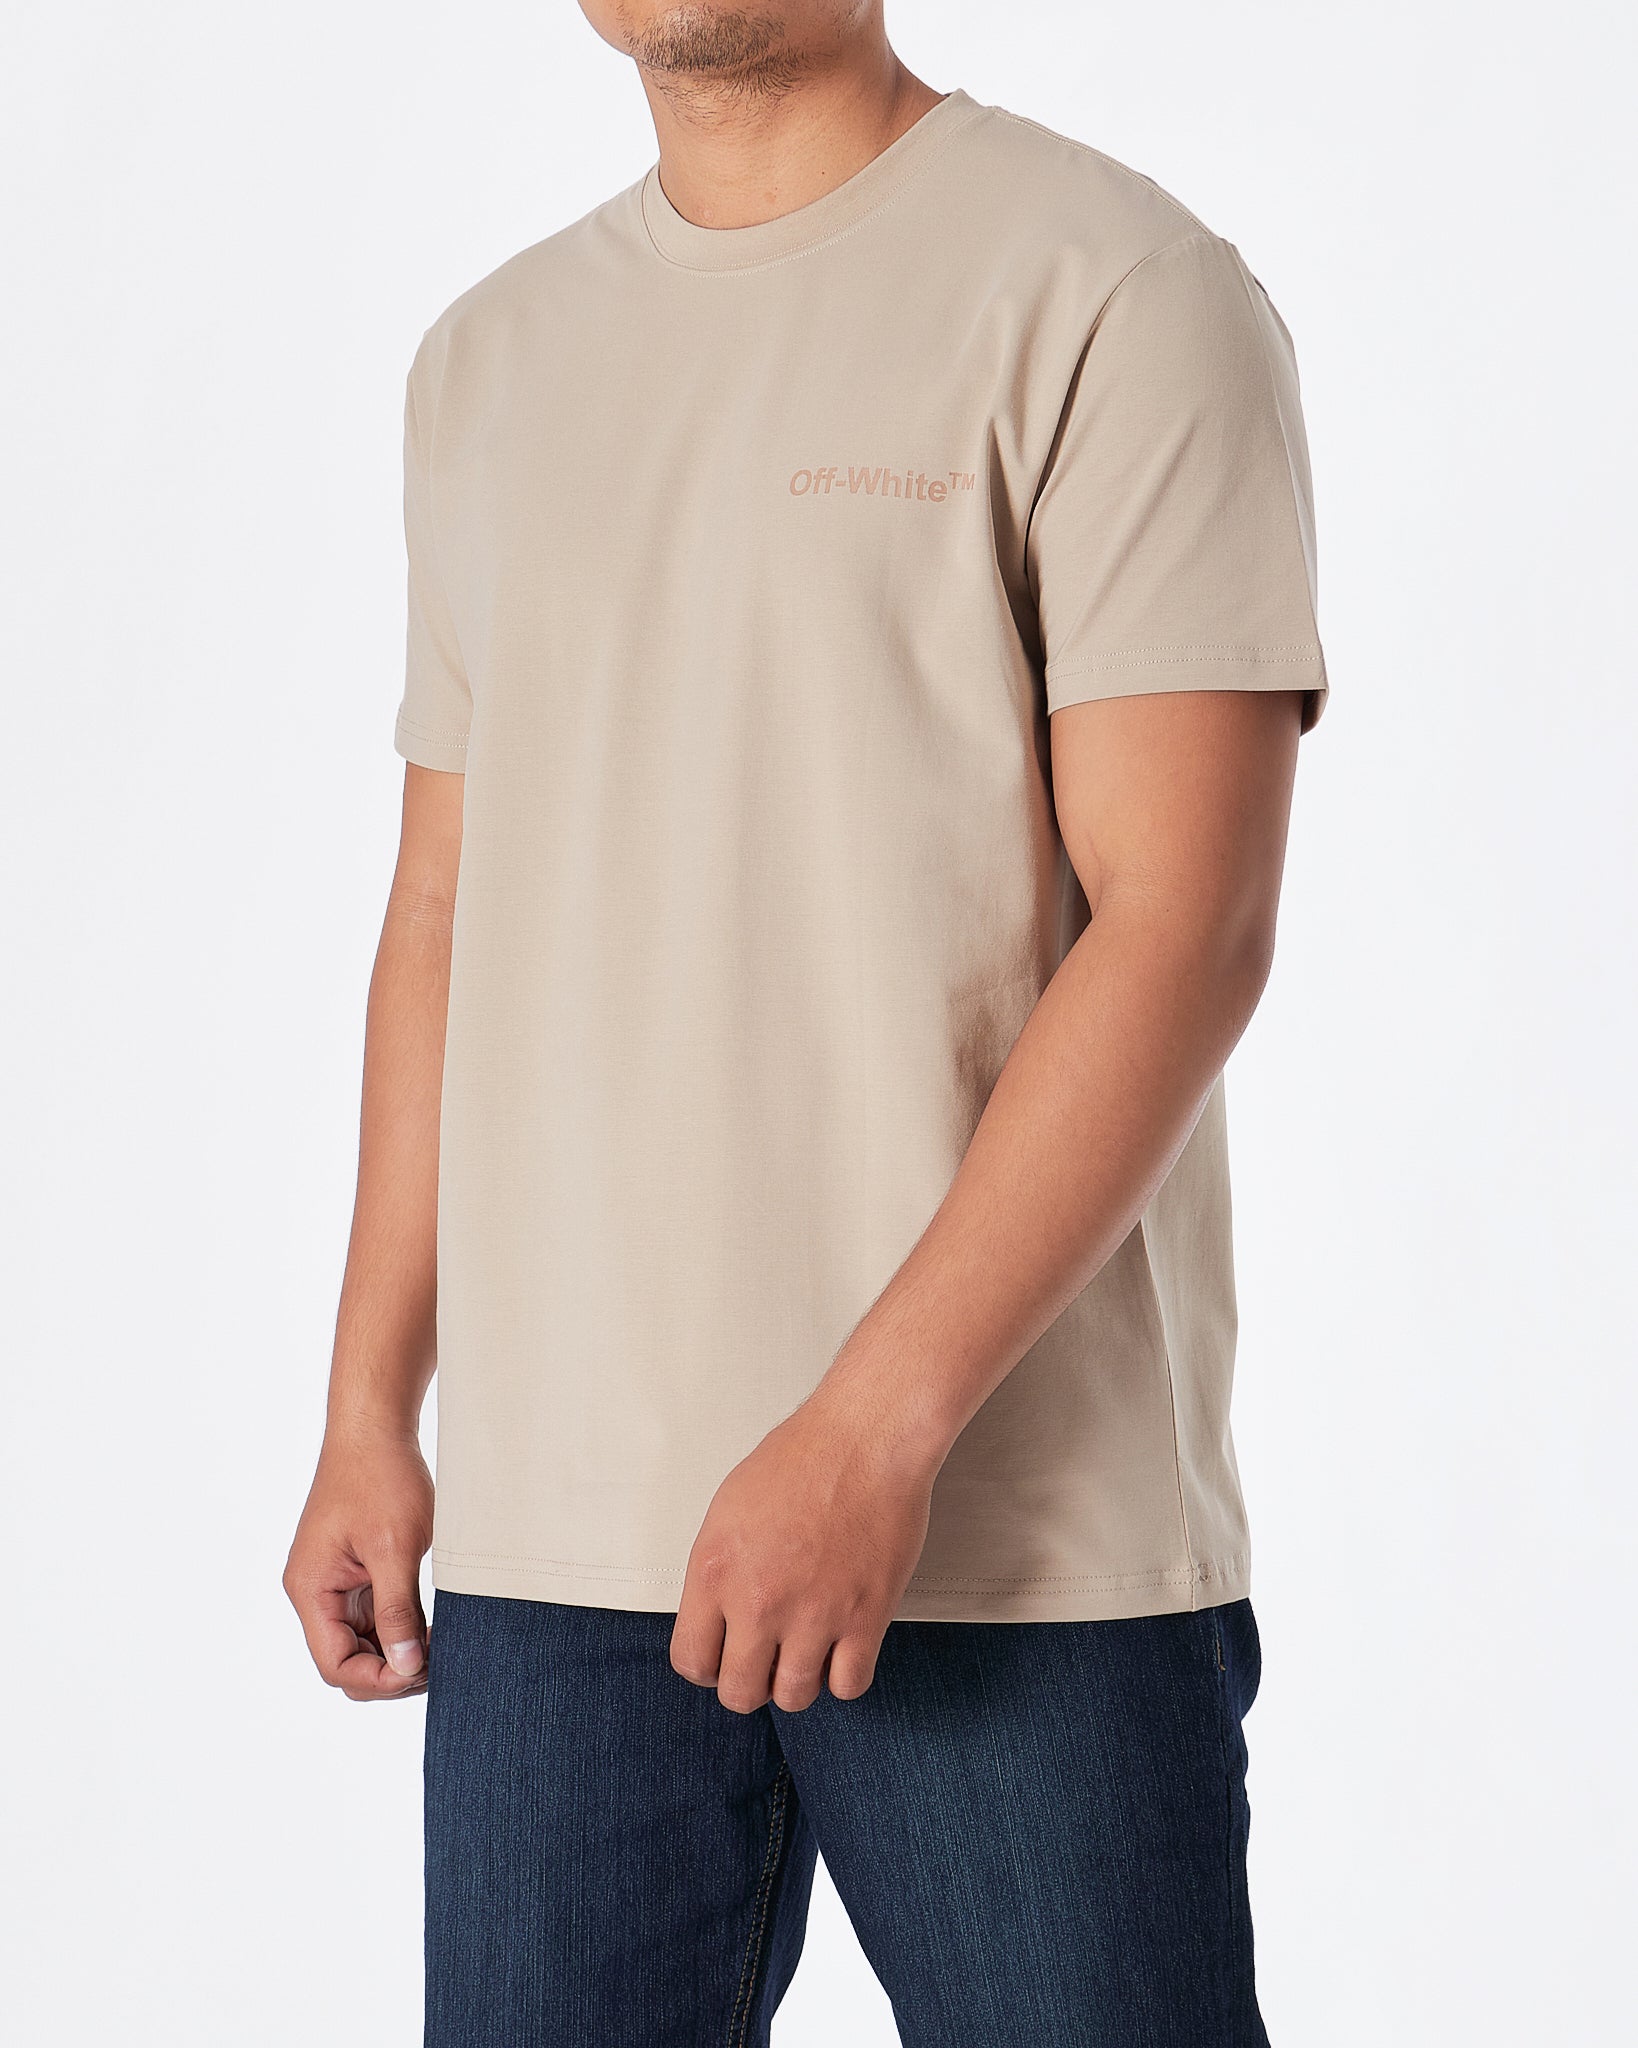 MOI OUTFIT-OW Men Cream T-Shirt 17.90